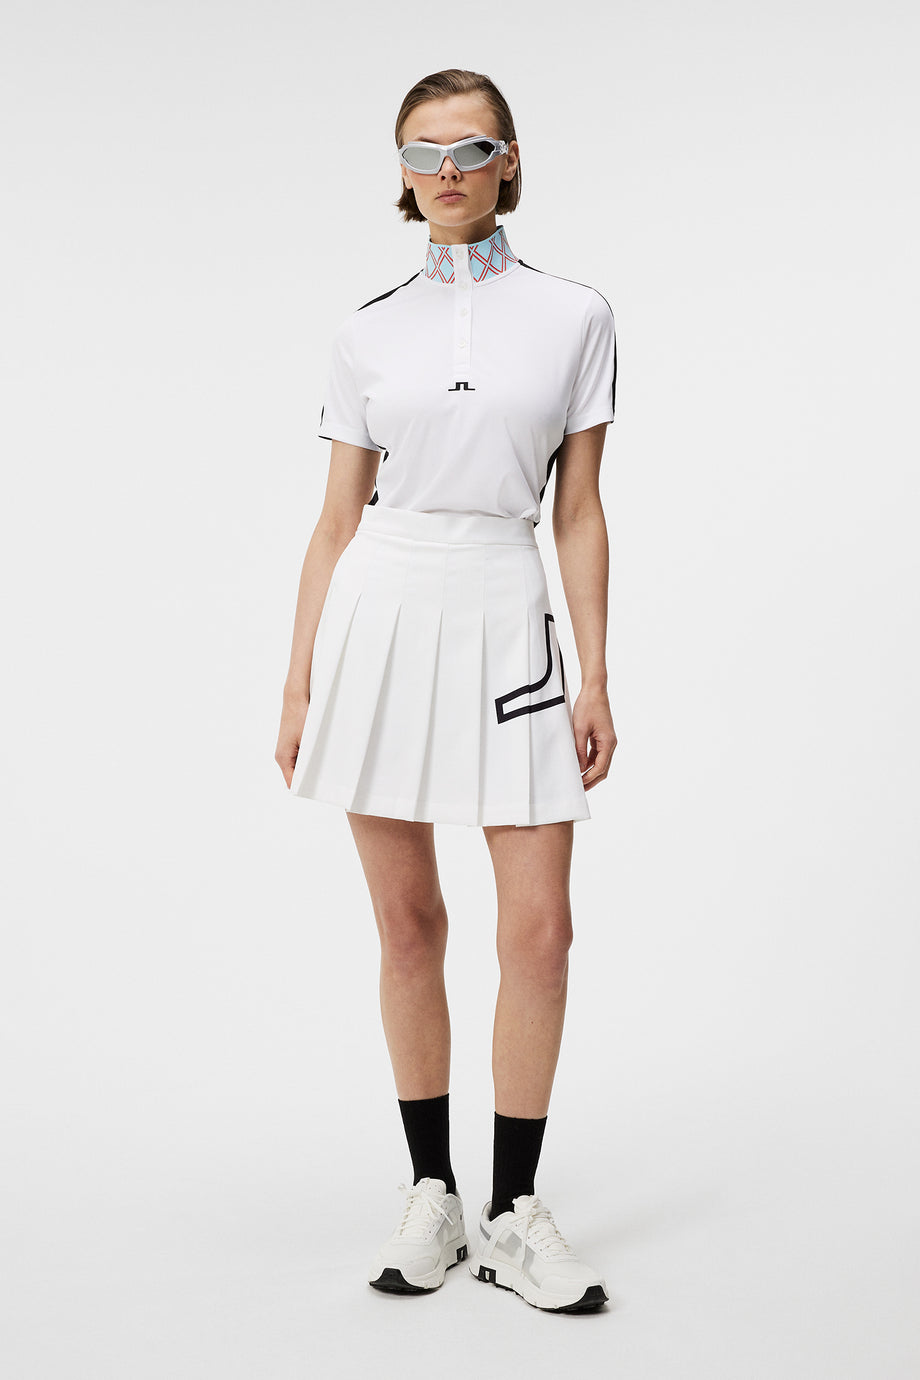 Naomi Skirt / White